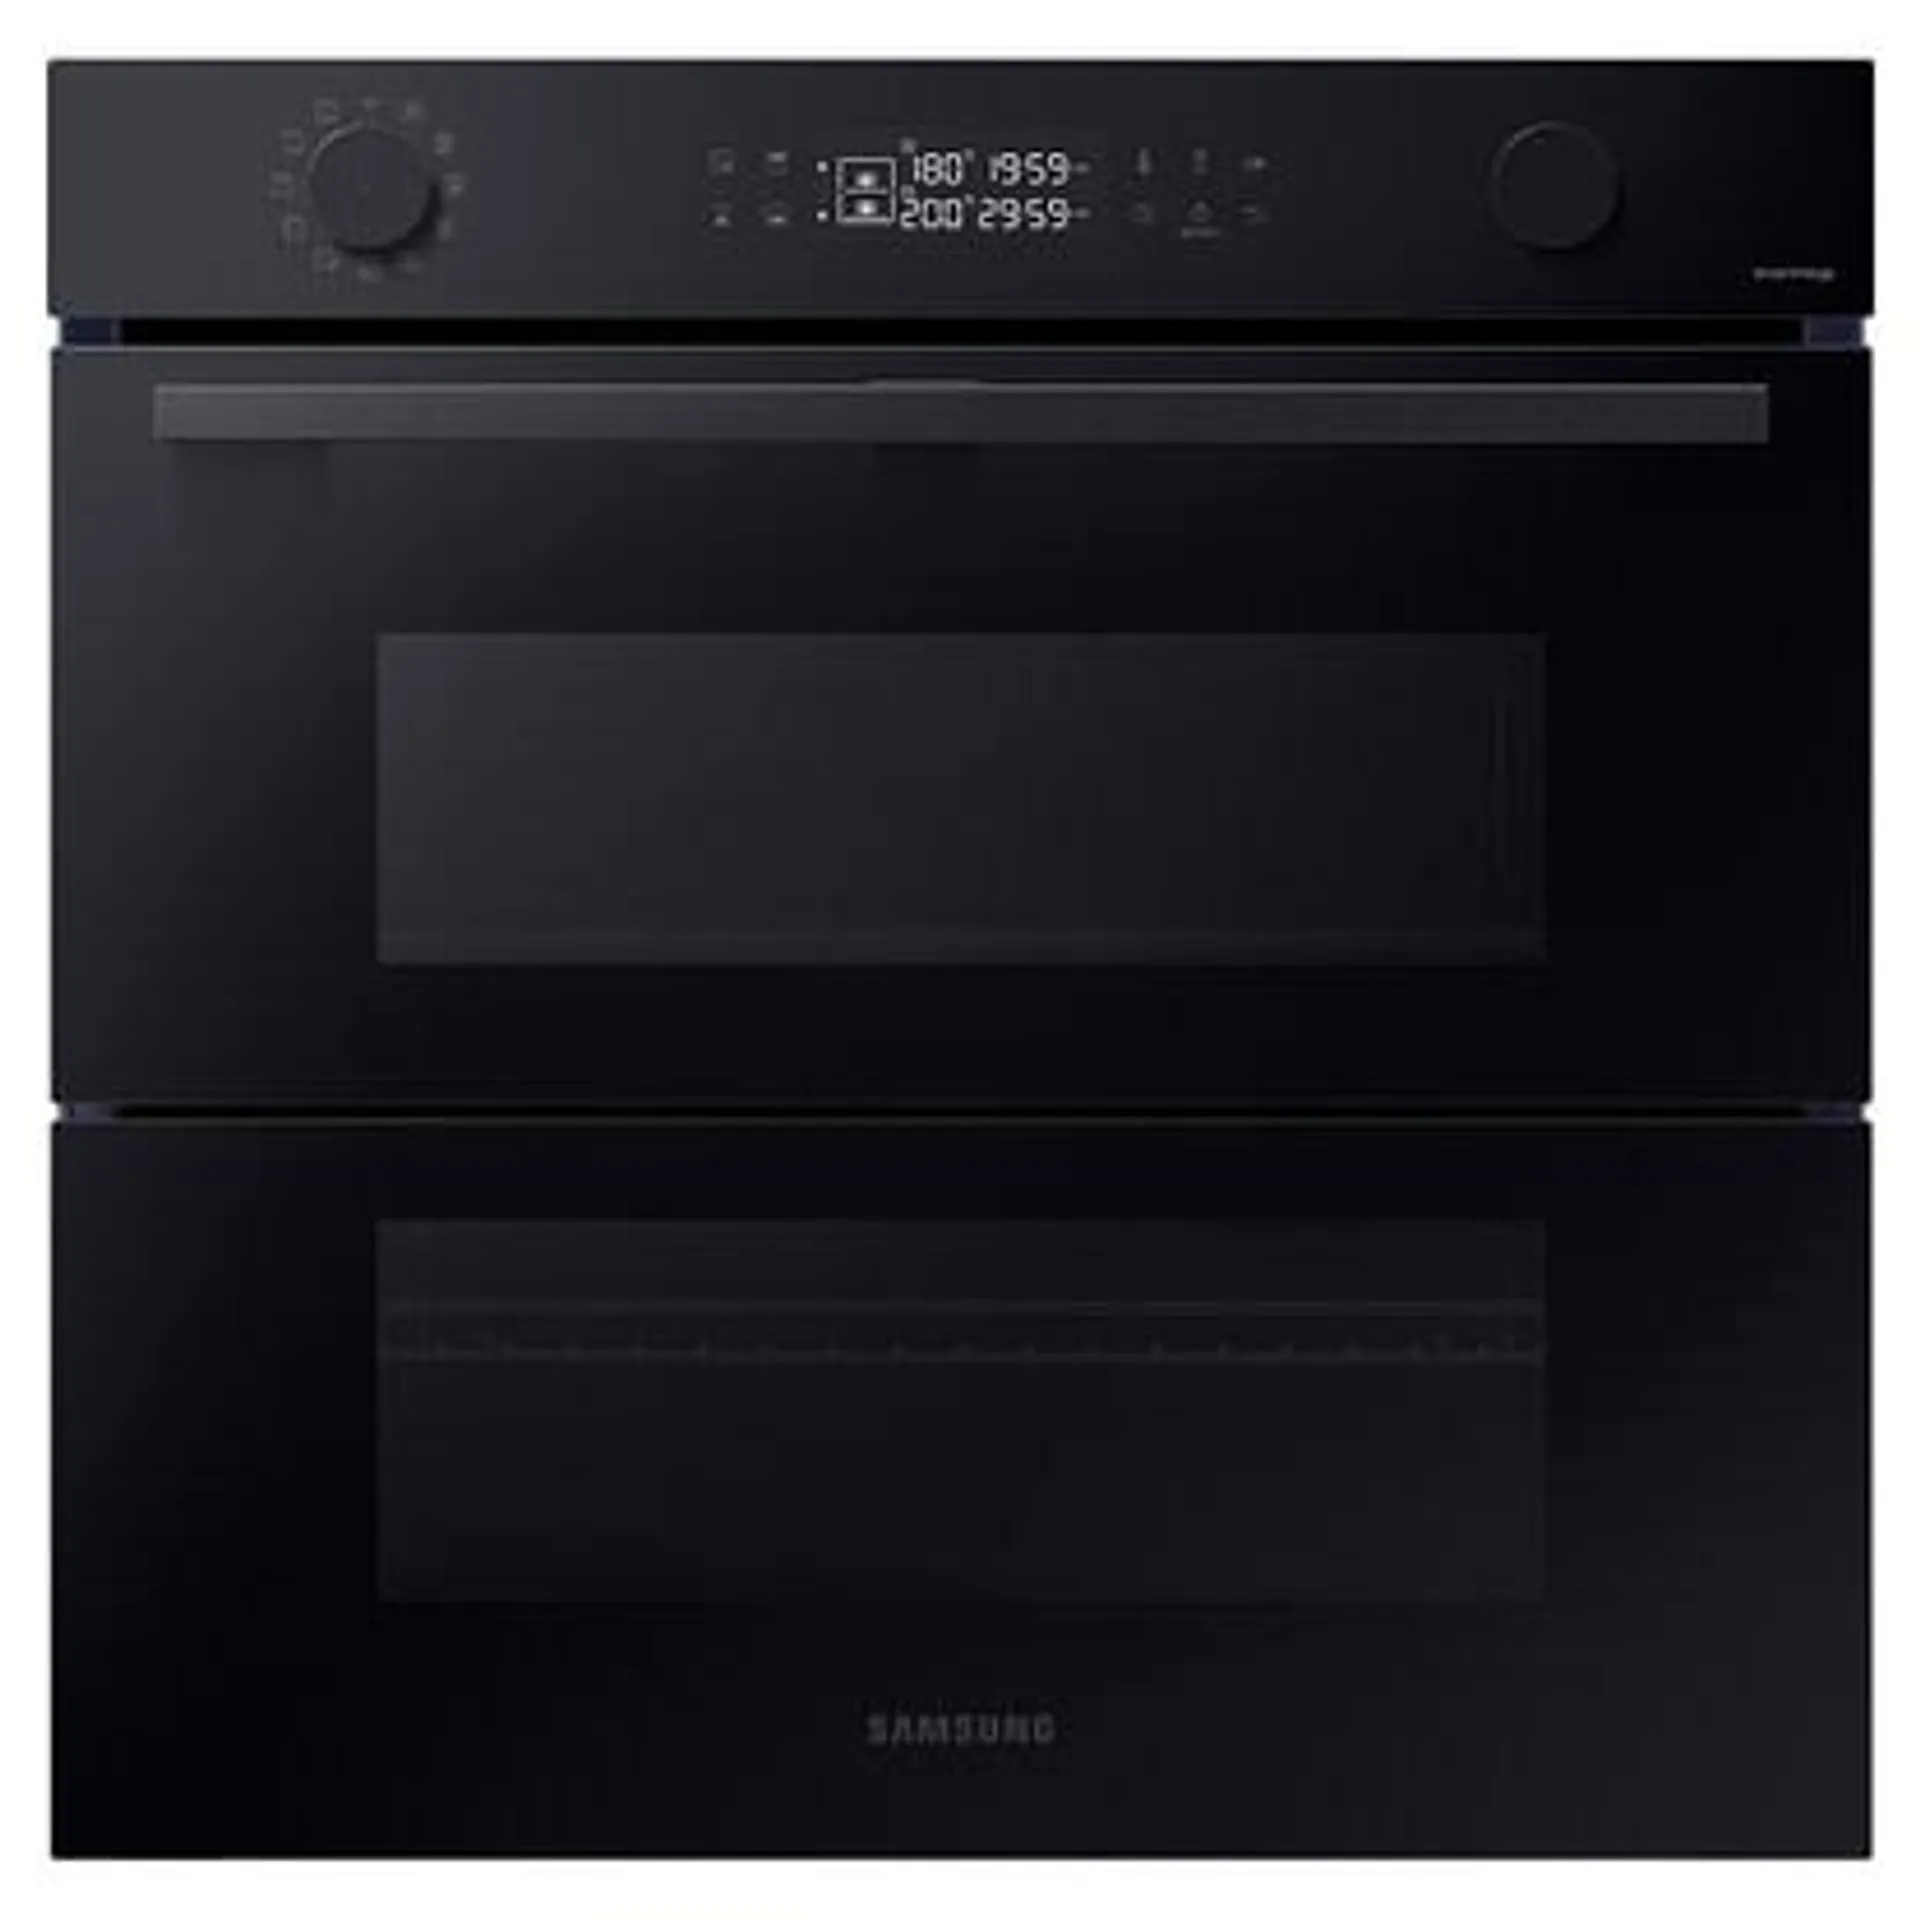 Samsung NV7B45305AK Pyrolytic Dual Cook Flex Multifunction Single Oven – BLACK